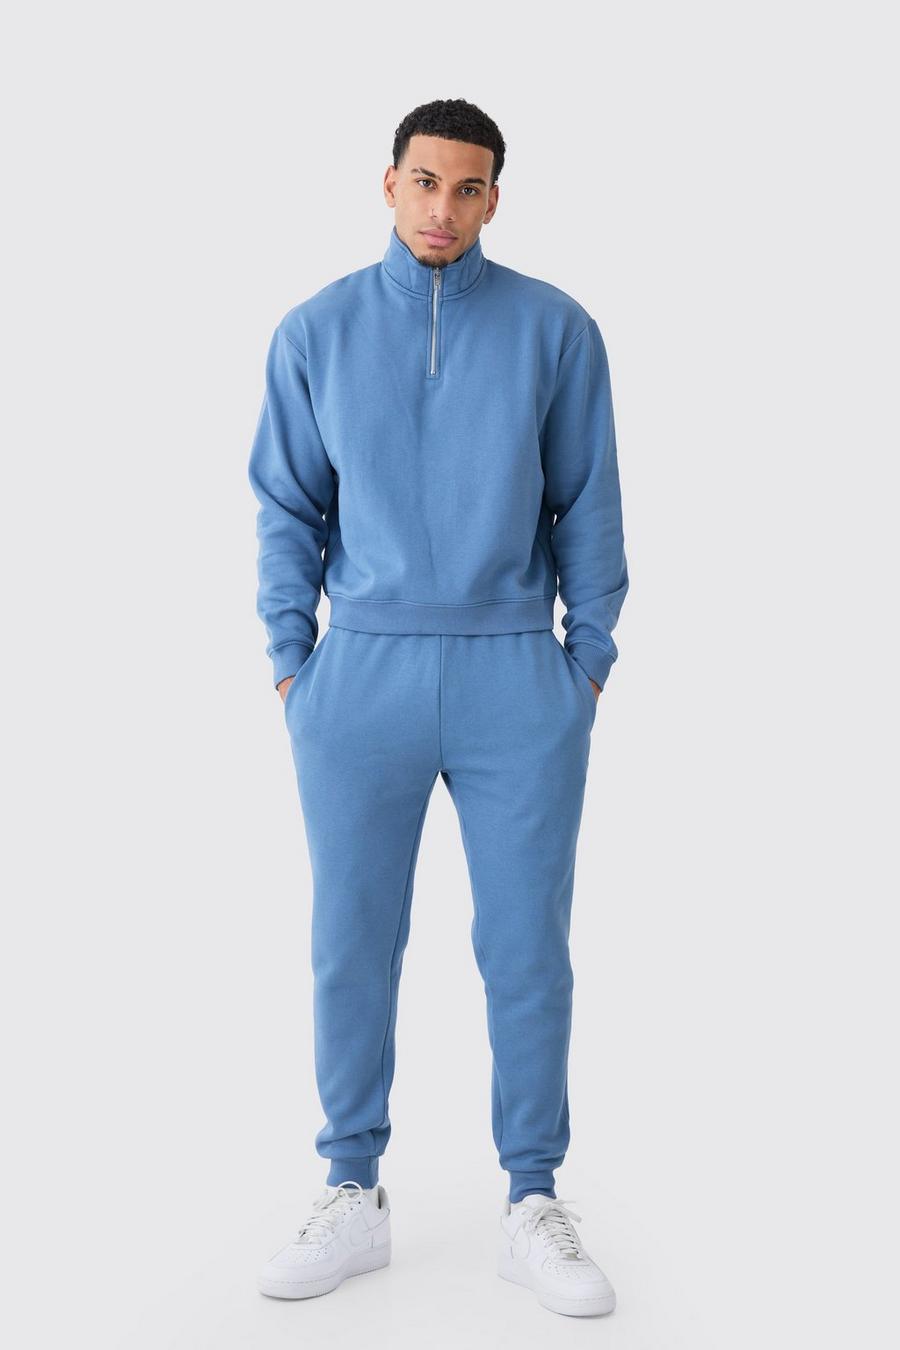 Slate blue Oversized Boxy 1/4 Zip Sweatshirt Tracksuit